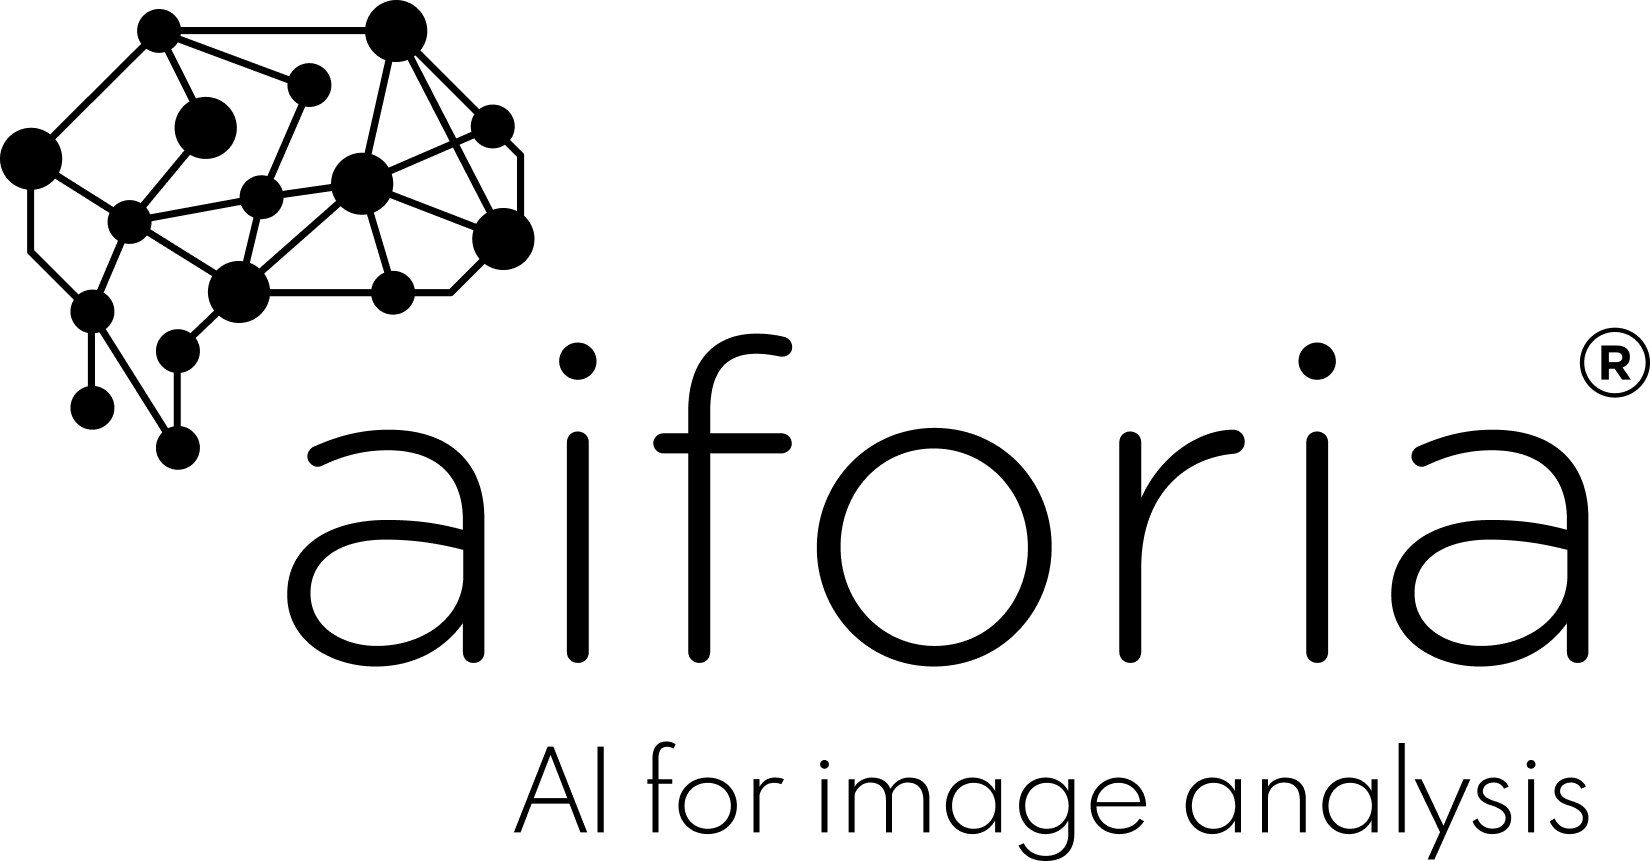 Aiforia logo